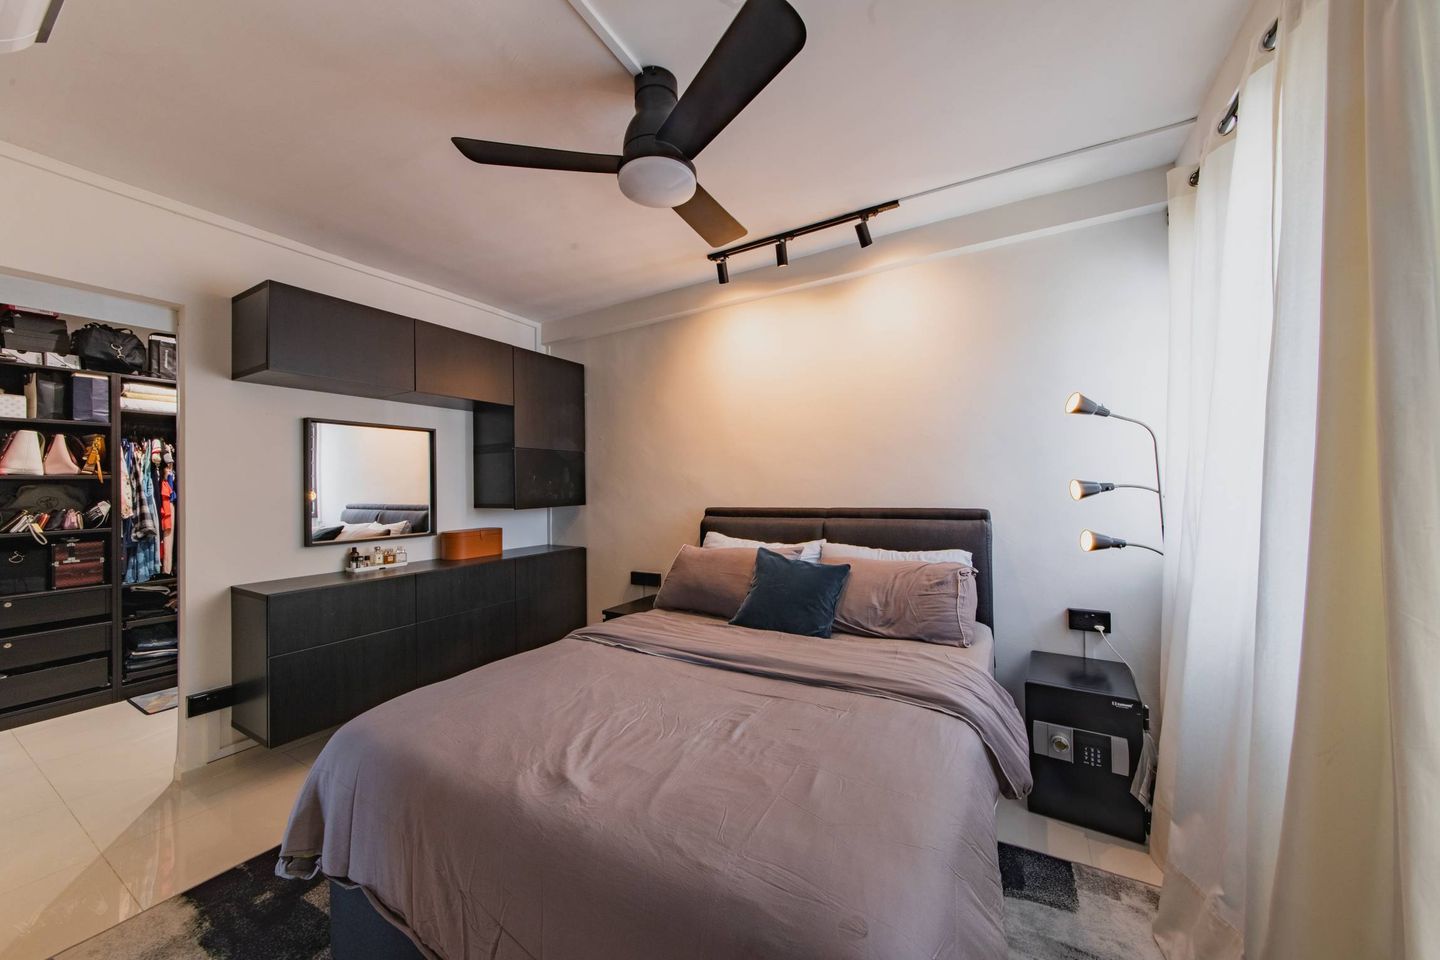 Bedroom Design With Adequate Storage - Livspace